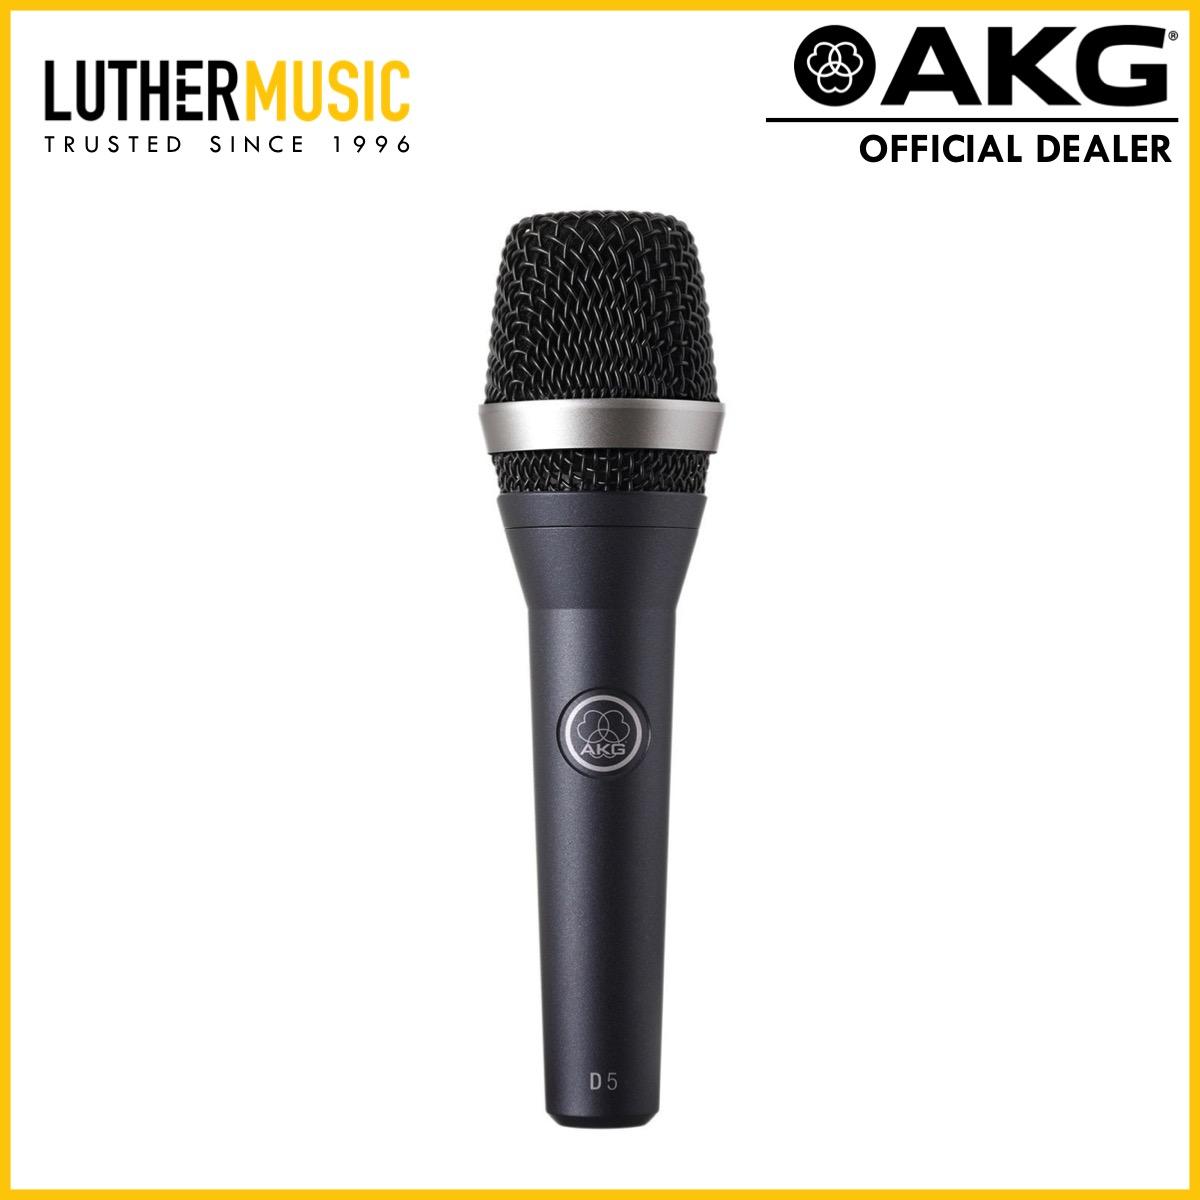 OFFICIAL DEALER] AKG D5 Professional Dynamic Vocal Microphone (Non-USB) | Singapore